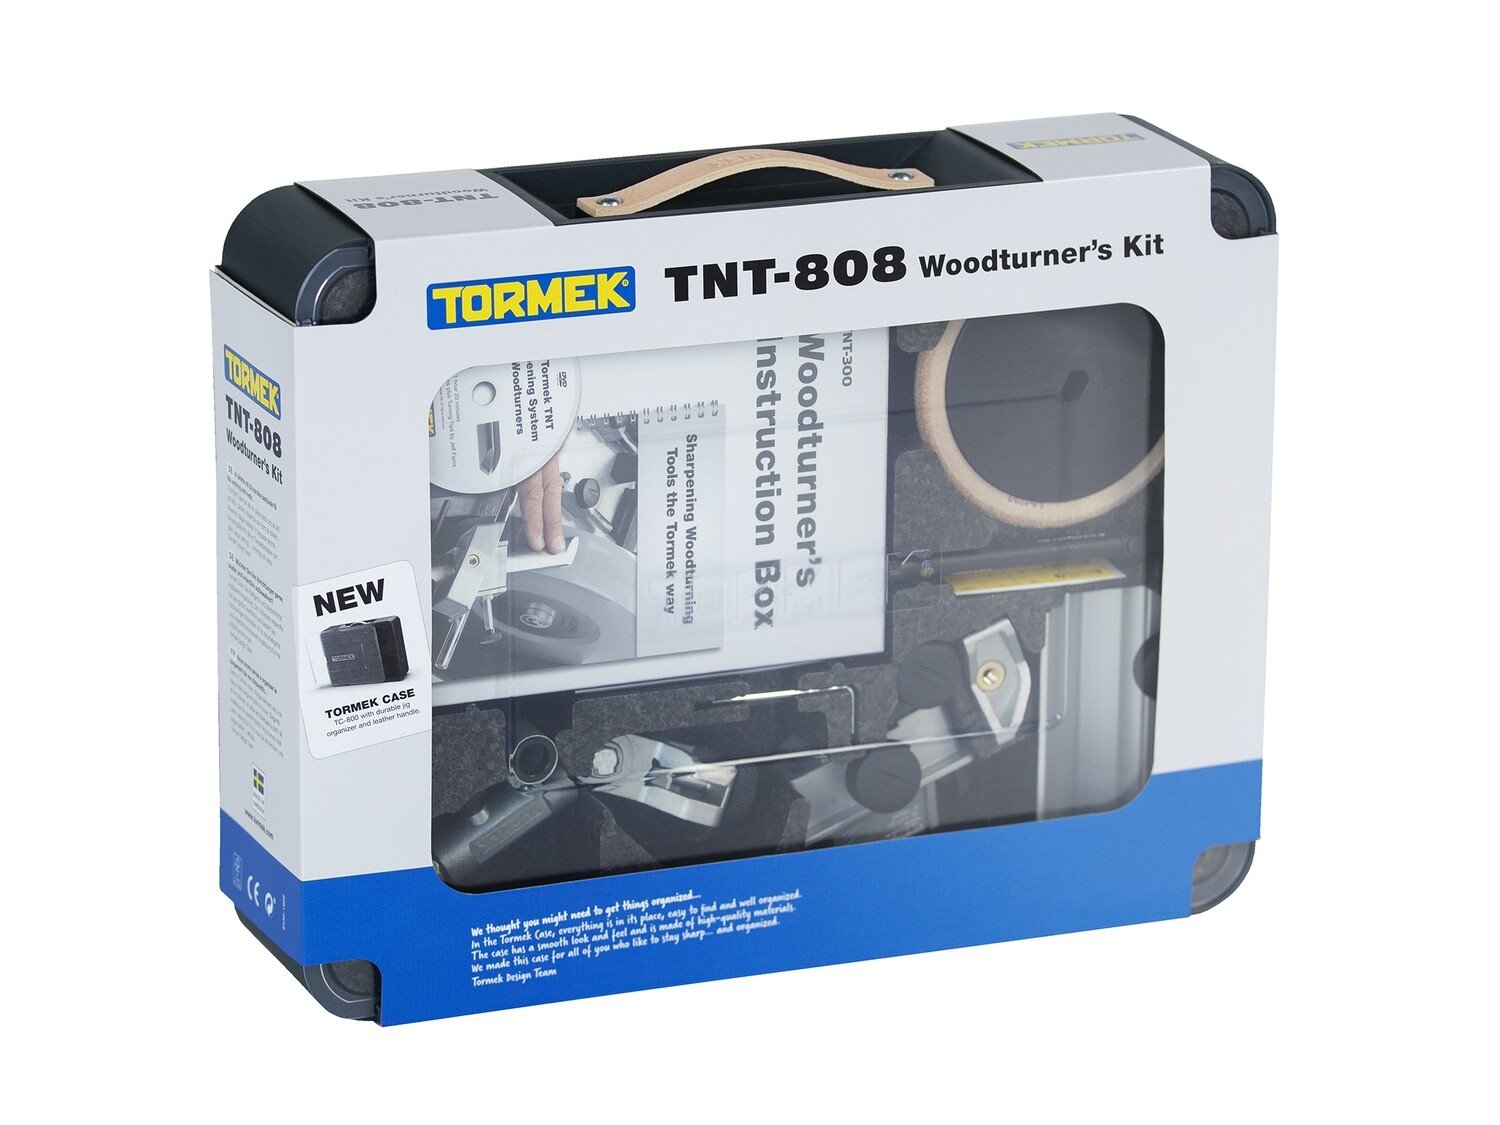 Front of Tormek TNT-808 Woodturner's Kit in retail packaging.